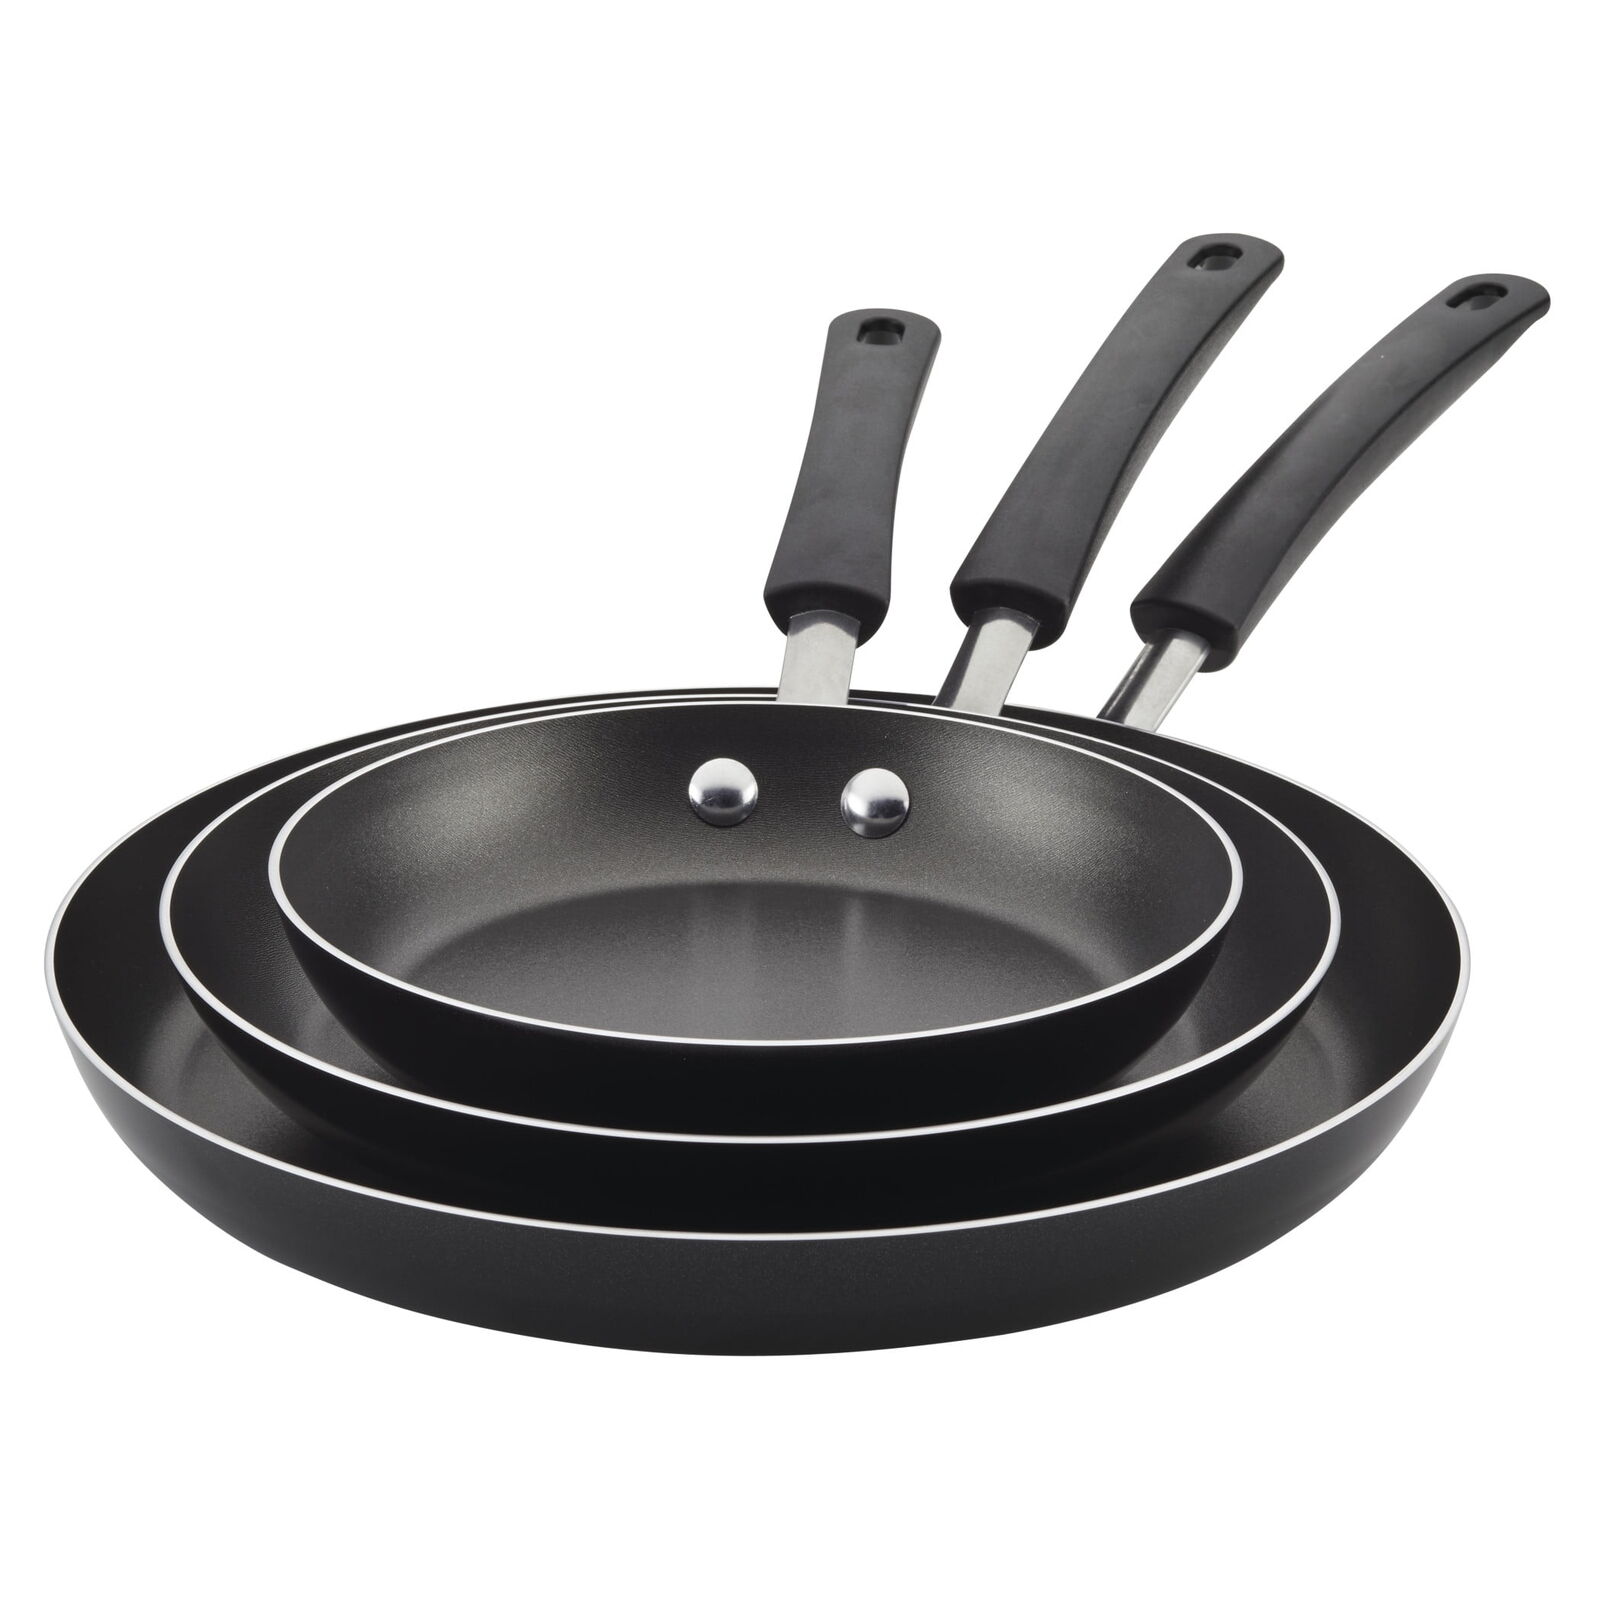 Farberware 3 Piece Easy Clean Aluminum Non-Stick Frying Pan,Fry Pan, Skillet Set